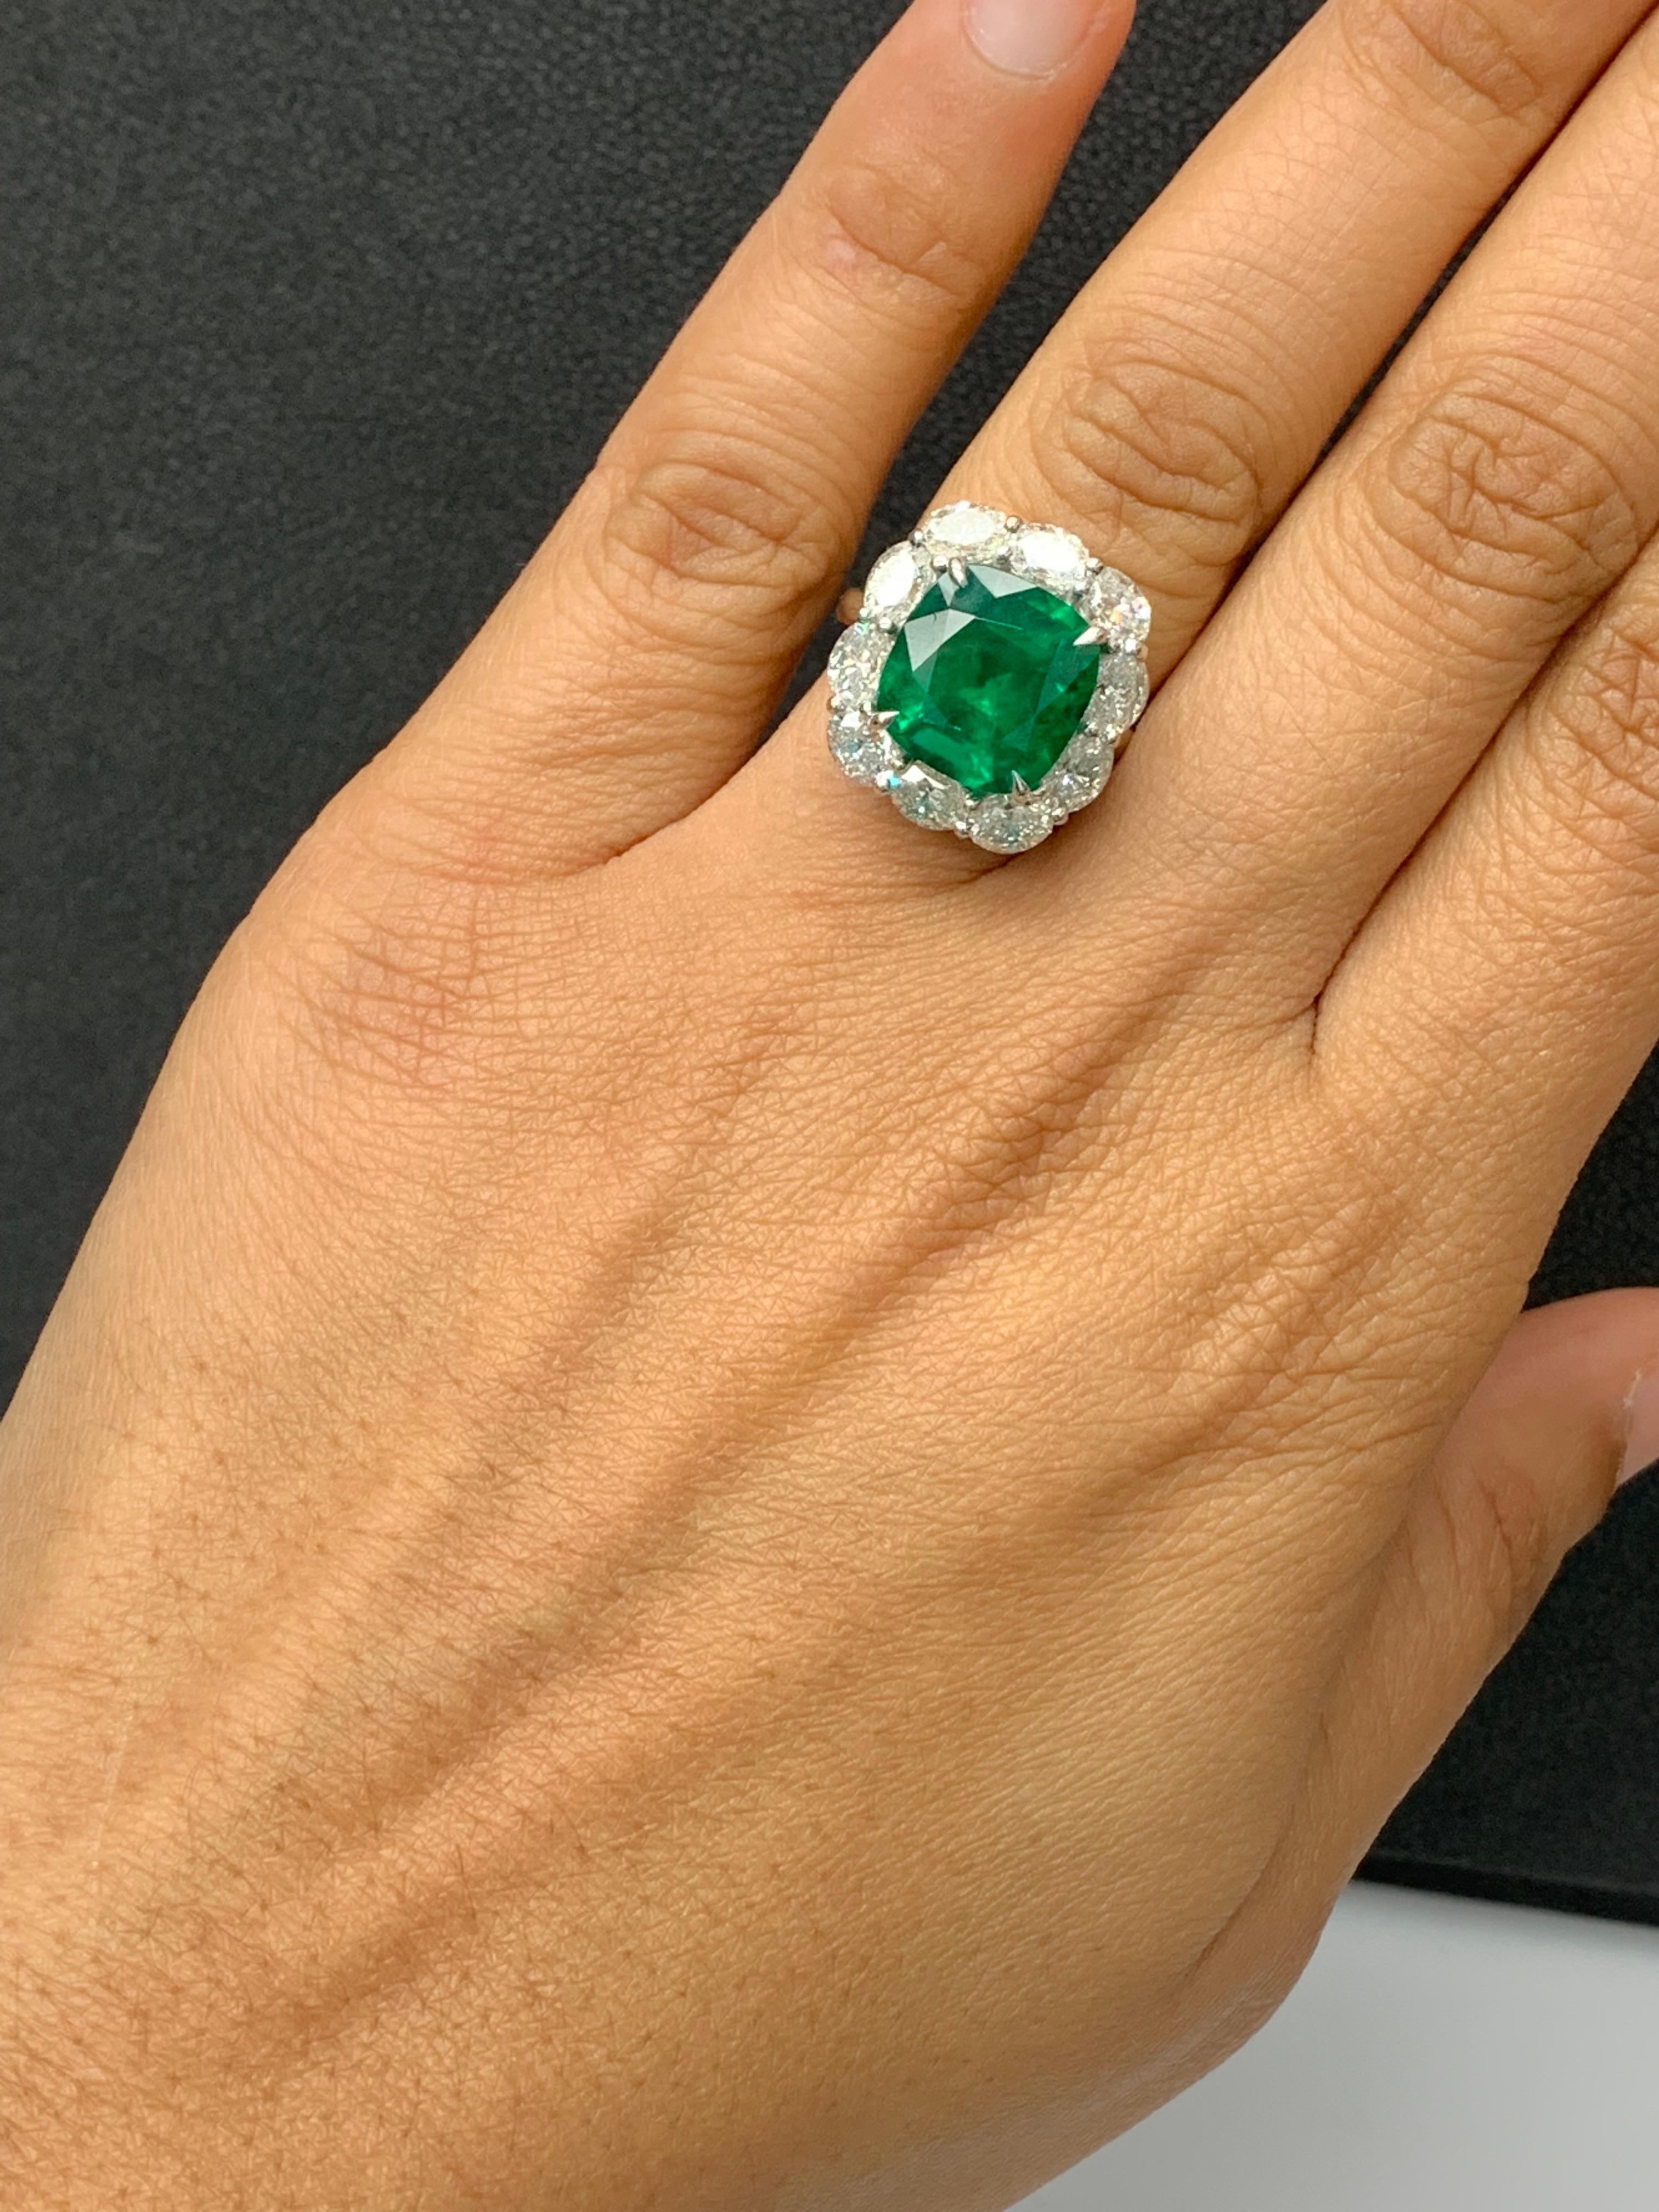 Women's Certified 6.58 Carat Cushion Cut Emerald Diamond Ring in Platinum For Sale